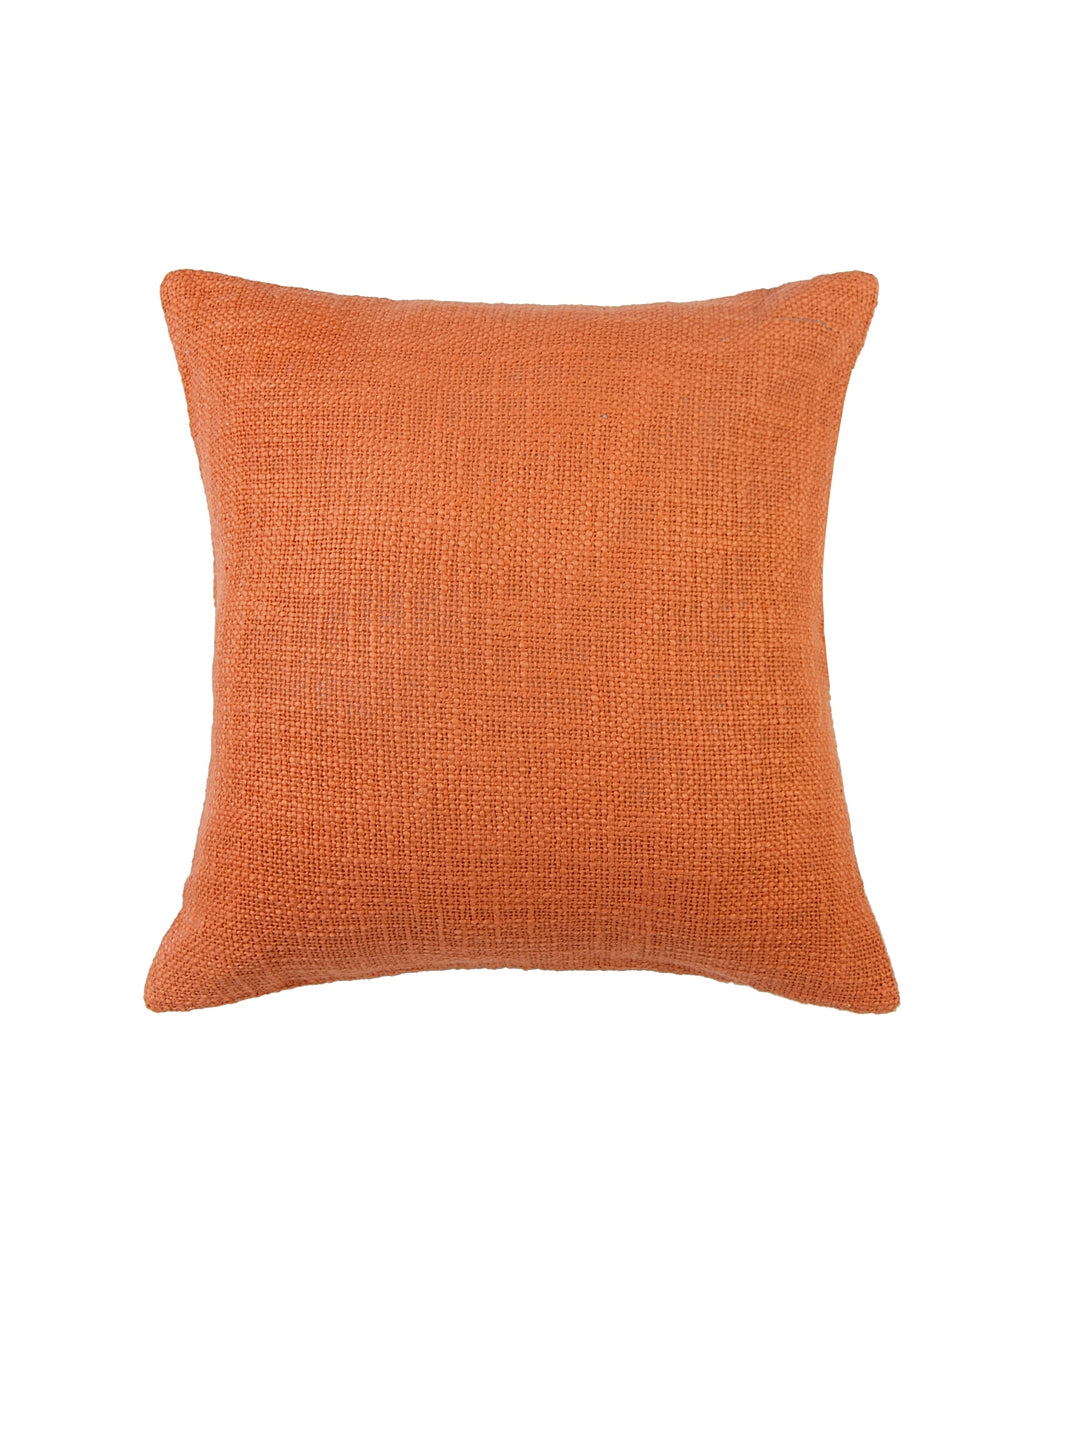 Rusty Orange Cushion Cover